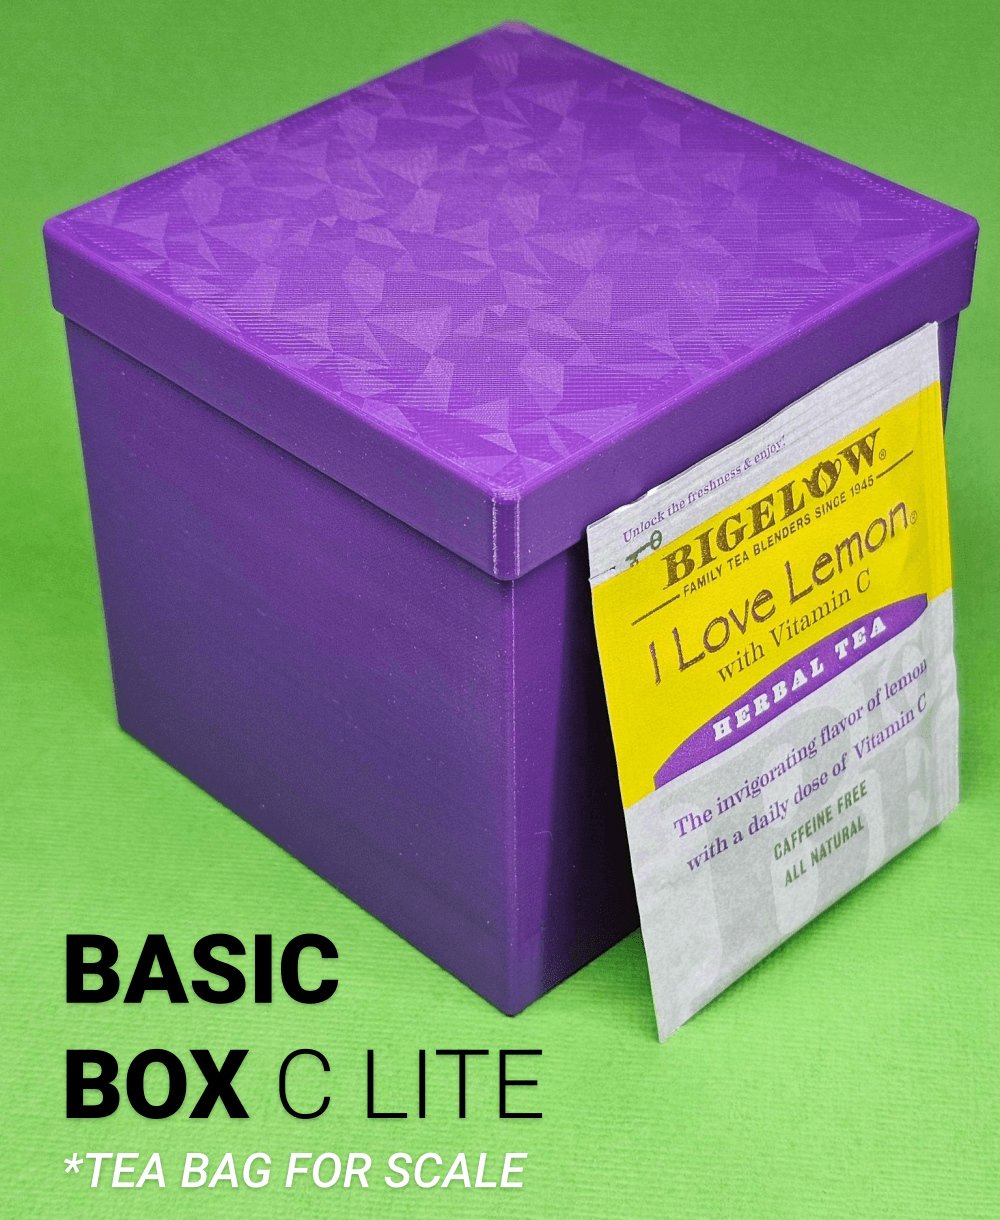 Basic Box C Lite | Gift box | Storage box | Organization | For Christmas gifts & birthday gifts 3d model